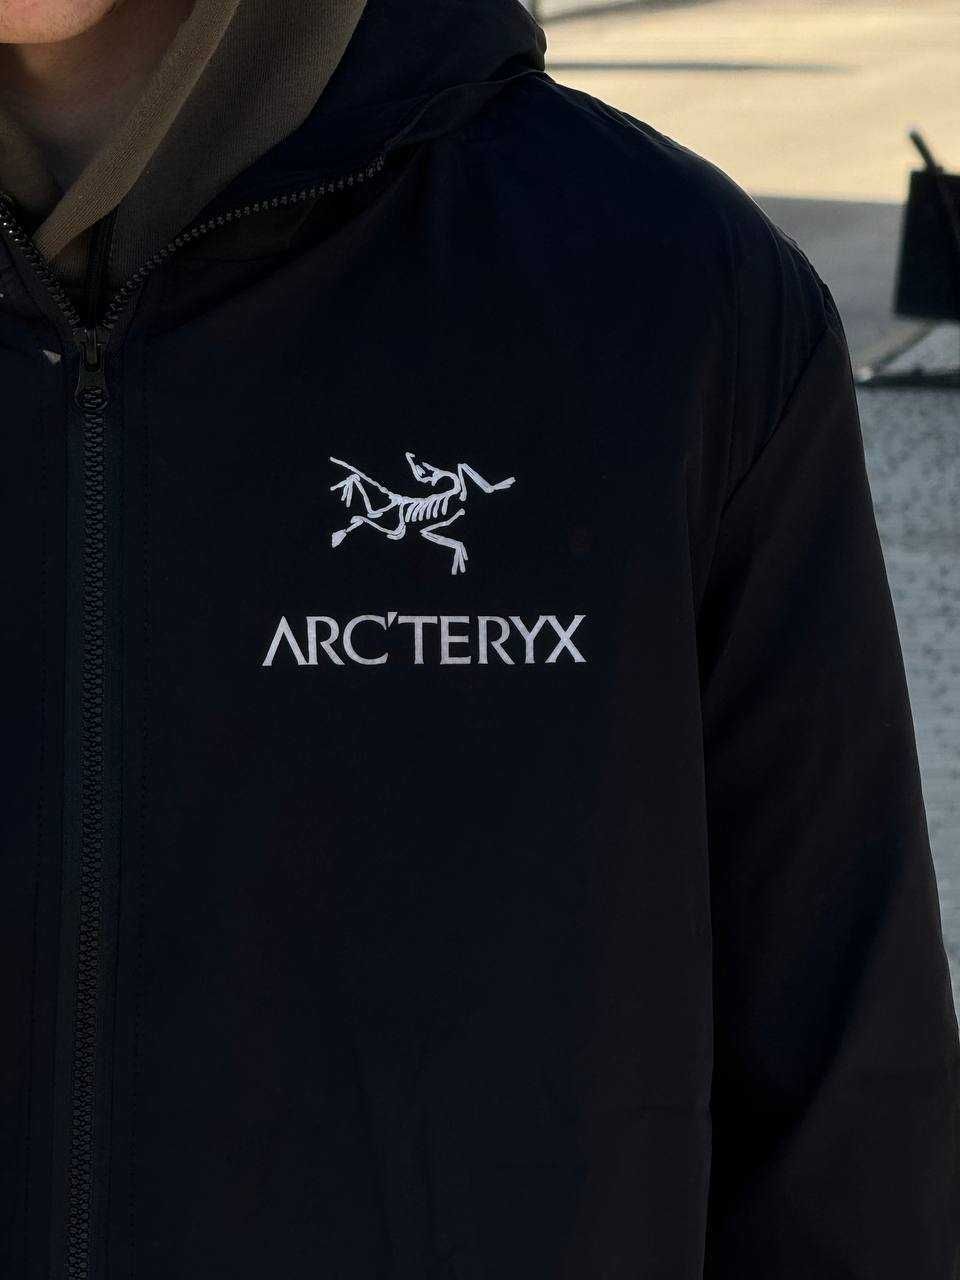 Артерікс ГорТекс вітровка чорна // Arcteryx мусжкая ветровка черная